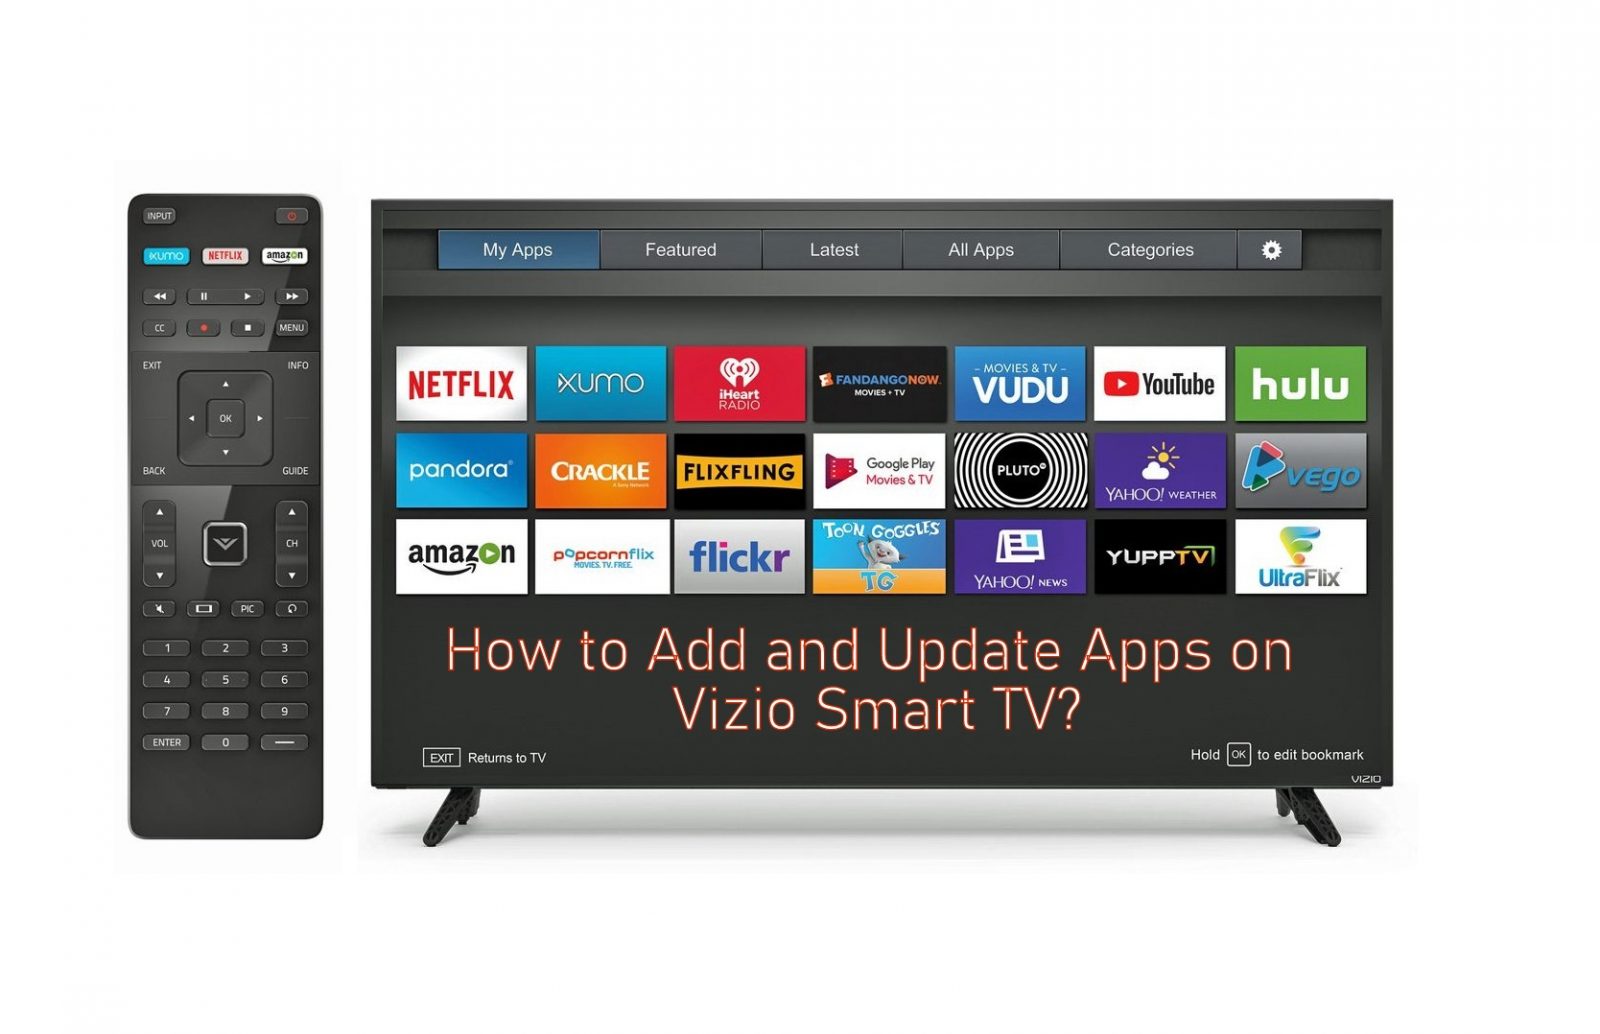 Update apps on Vizio Smart TV